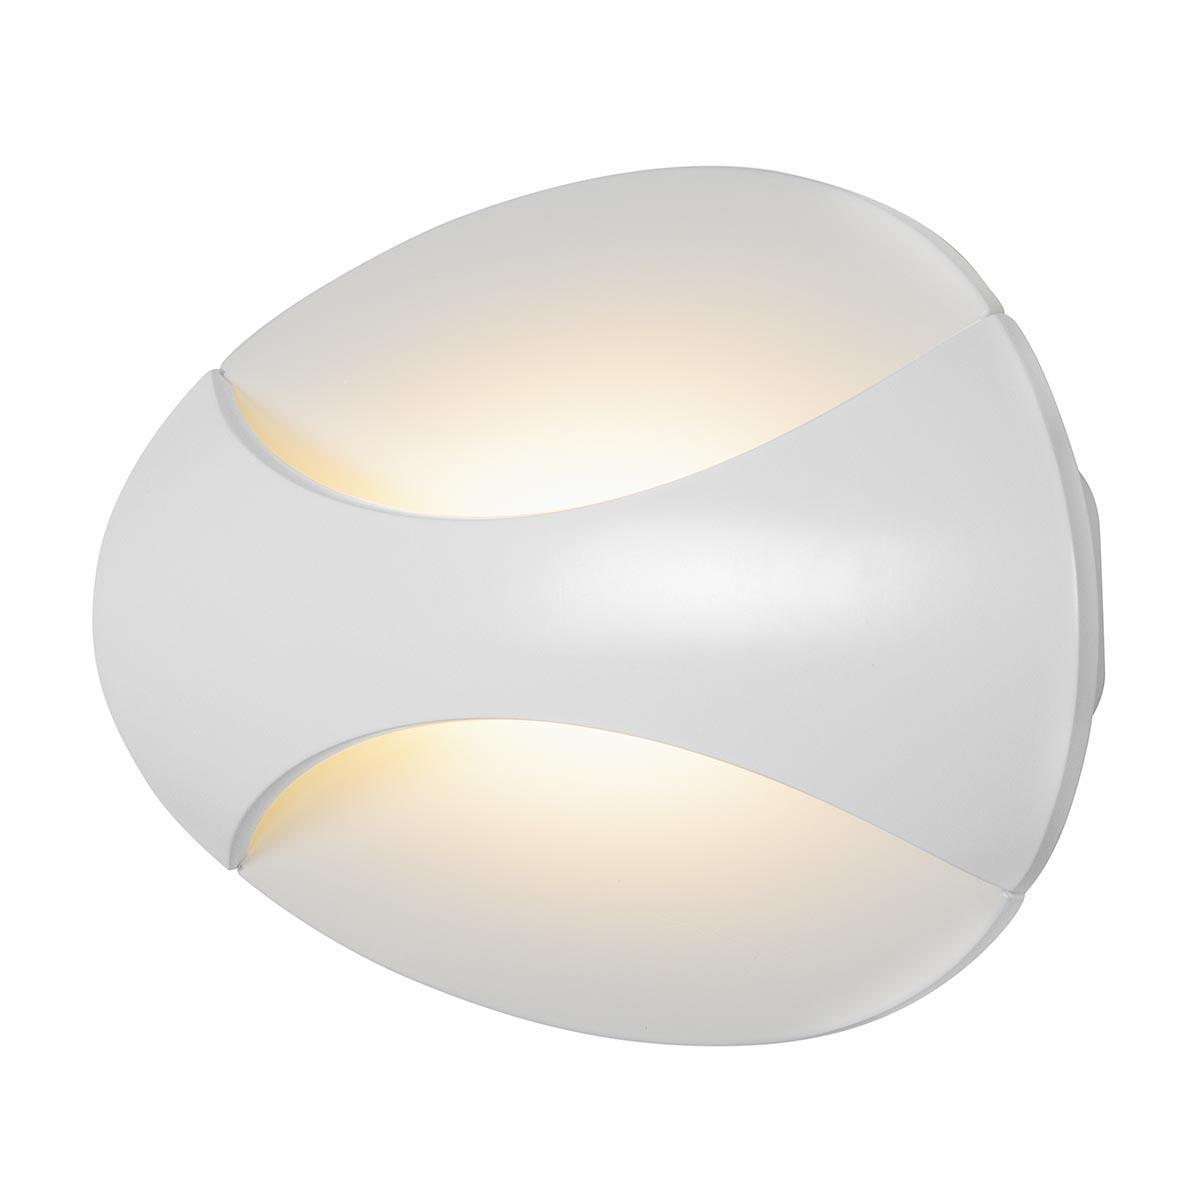 Настенный светодиодный светильник iLedex Flux ZD7151-6W WH matt white электромясорубка viatto hm 12 850 вт white